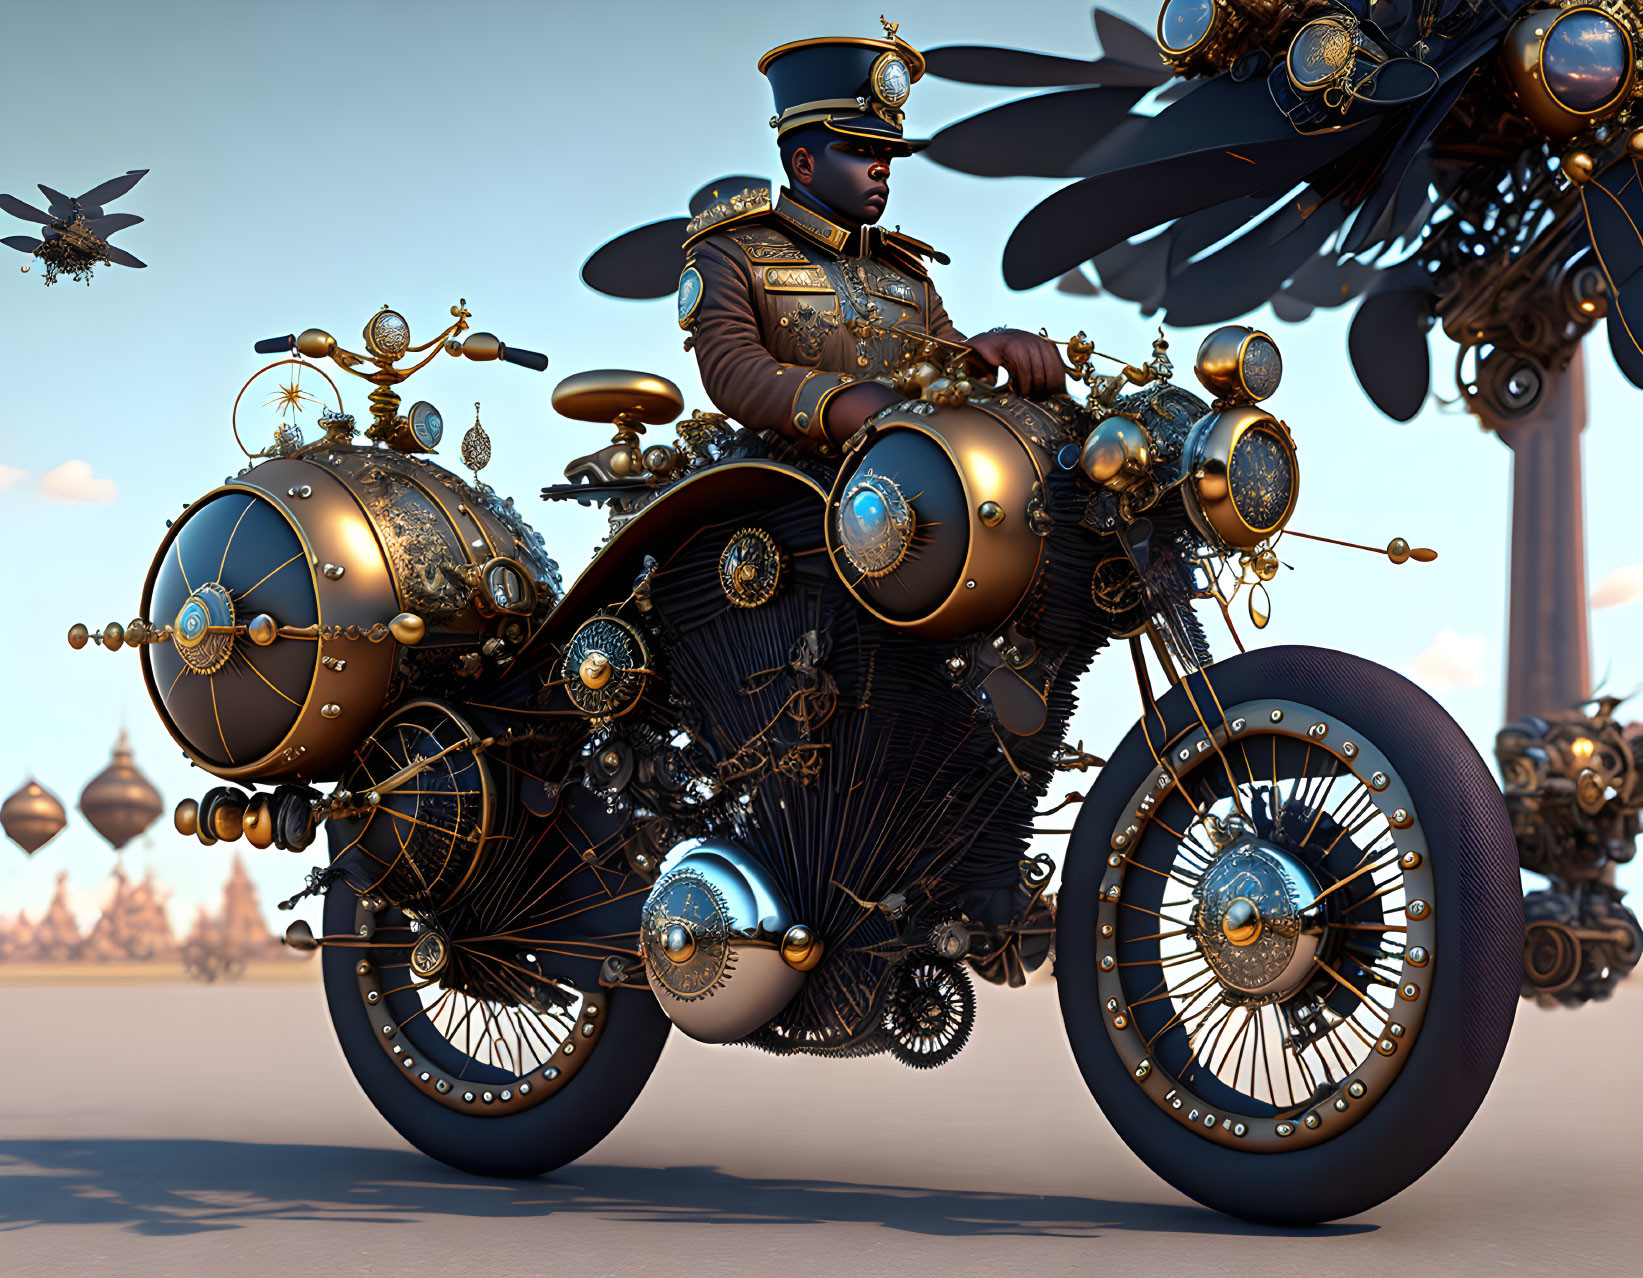 Steampunk Art: Man in Victorian Attire on Mechanical Motorcycle